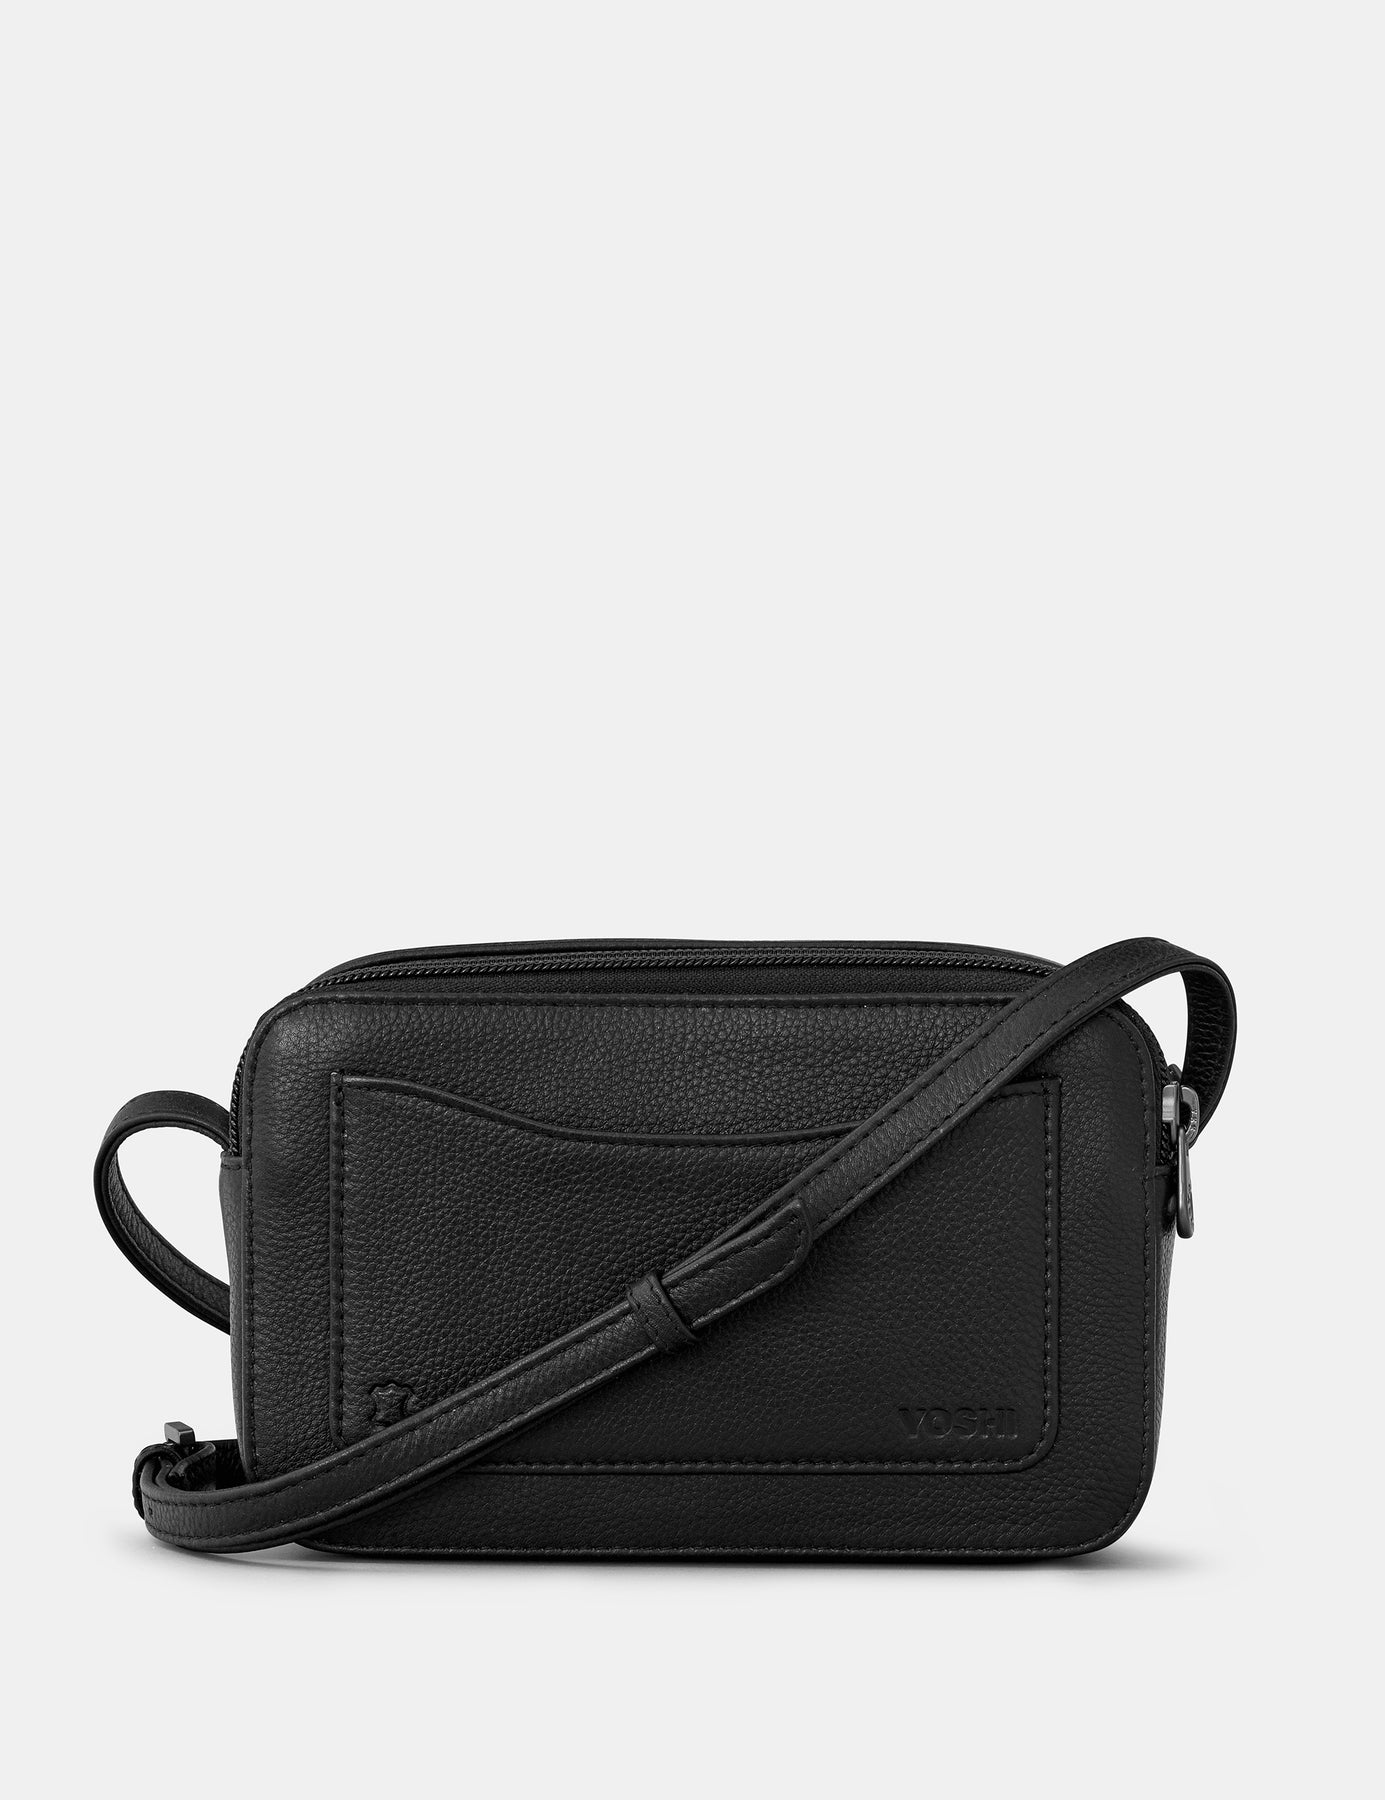 Leather Handbags | Designer Leather Bags & Leather Purses | Yoshi